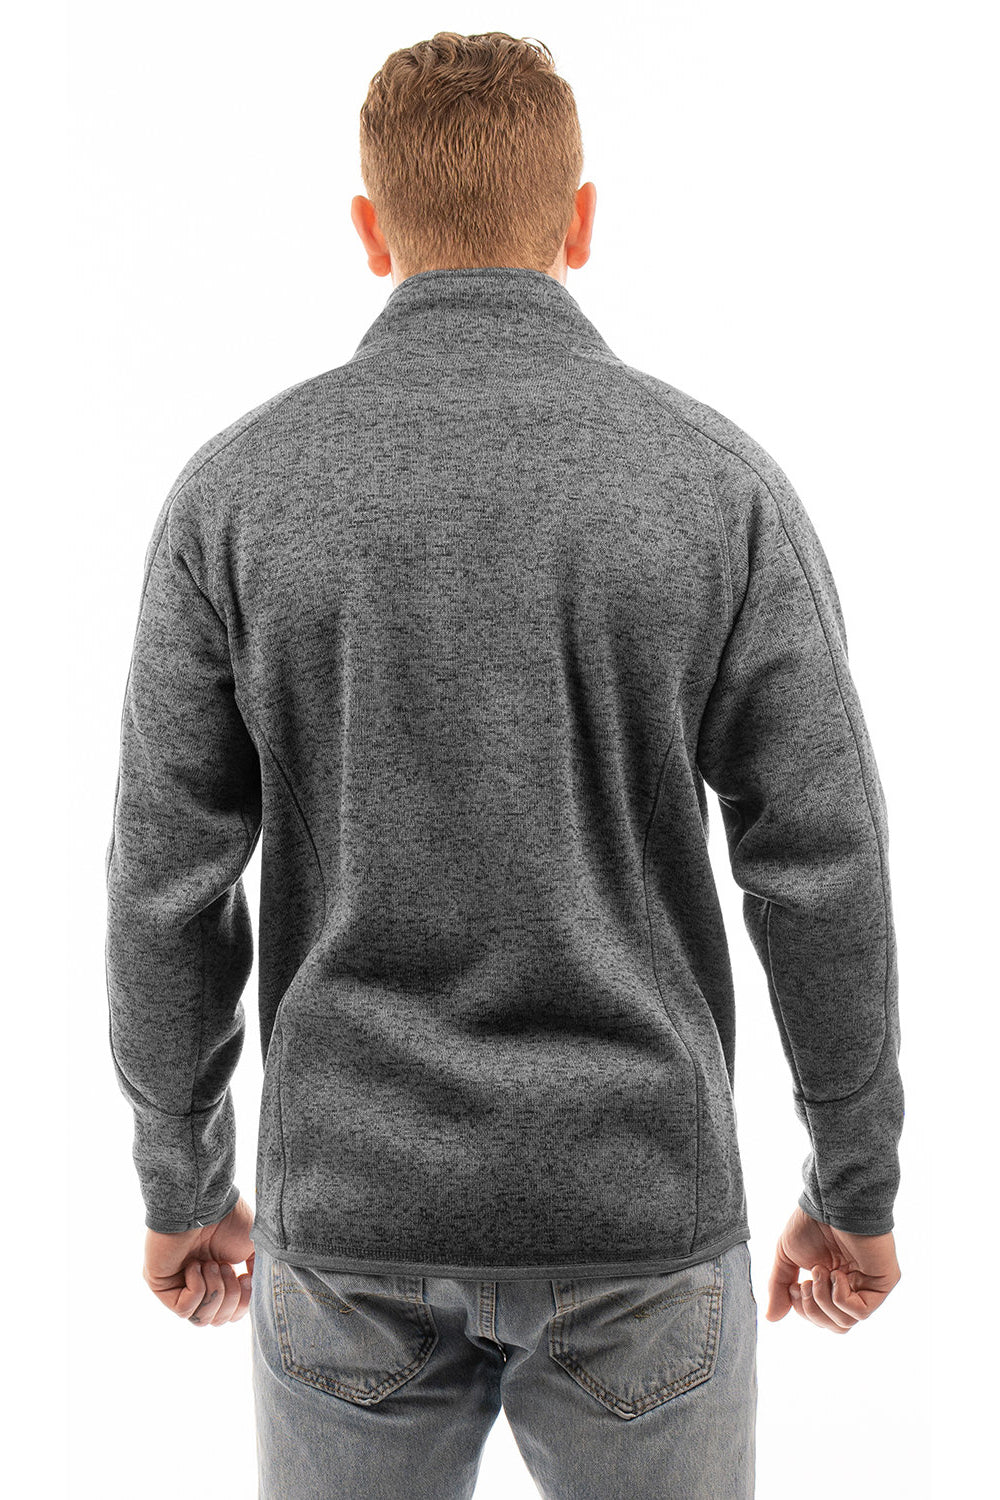 Burnside 3901 Mens Sweater Knit Full Zip Jacket Heather Charcoal Grey Model Back